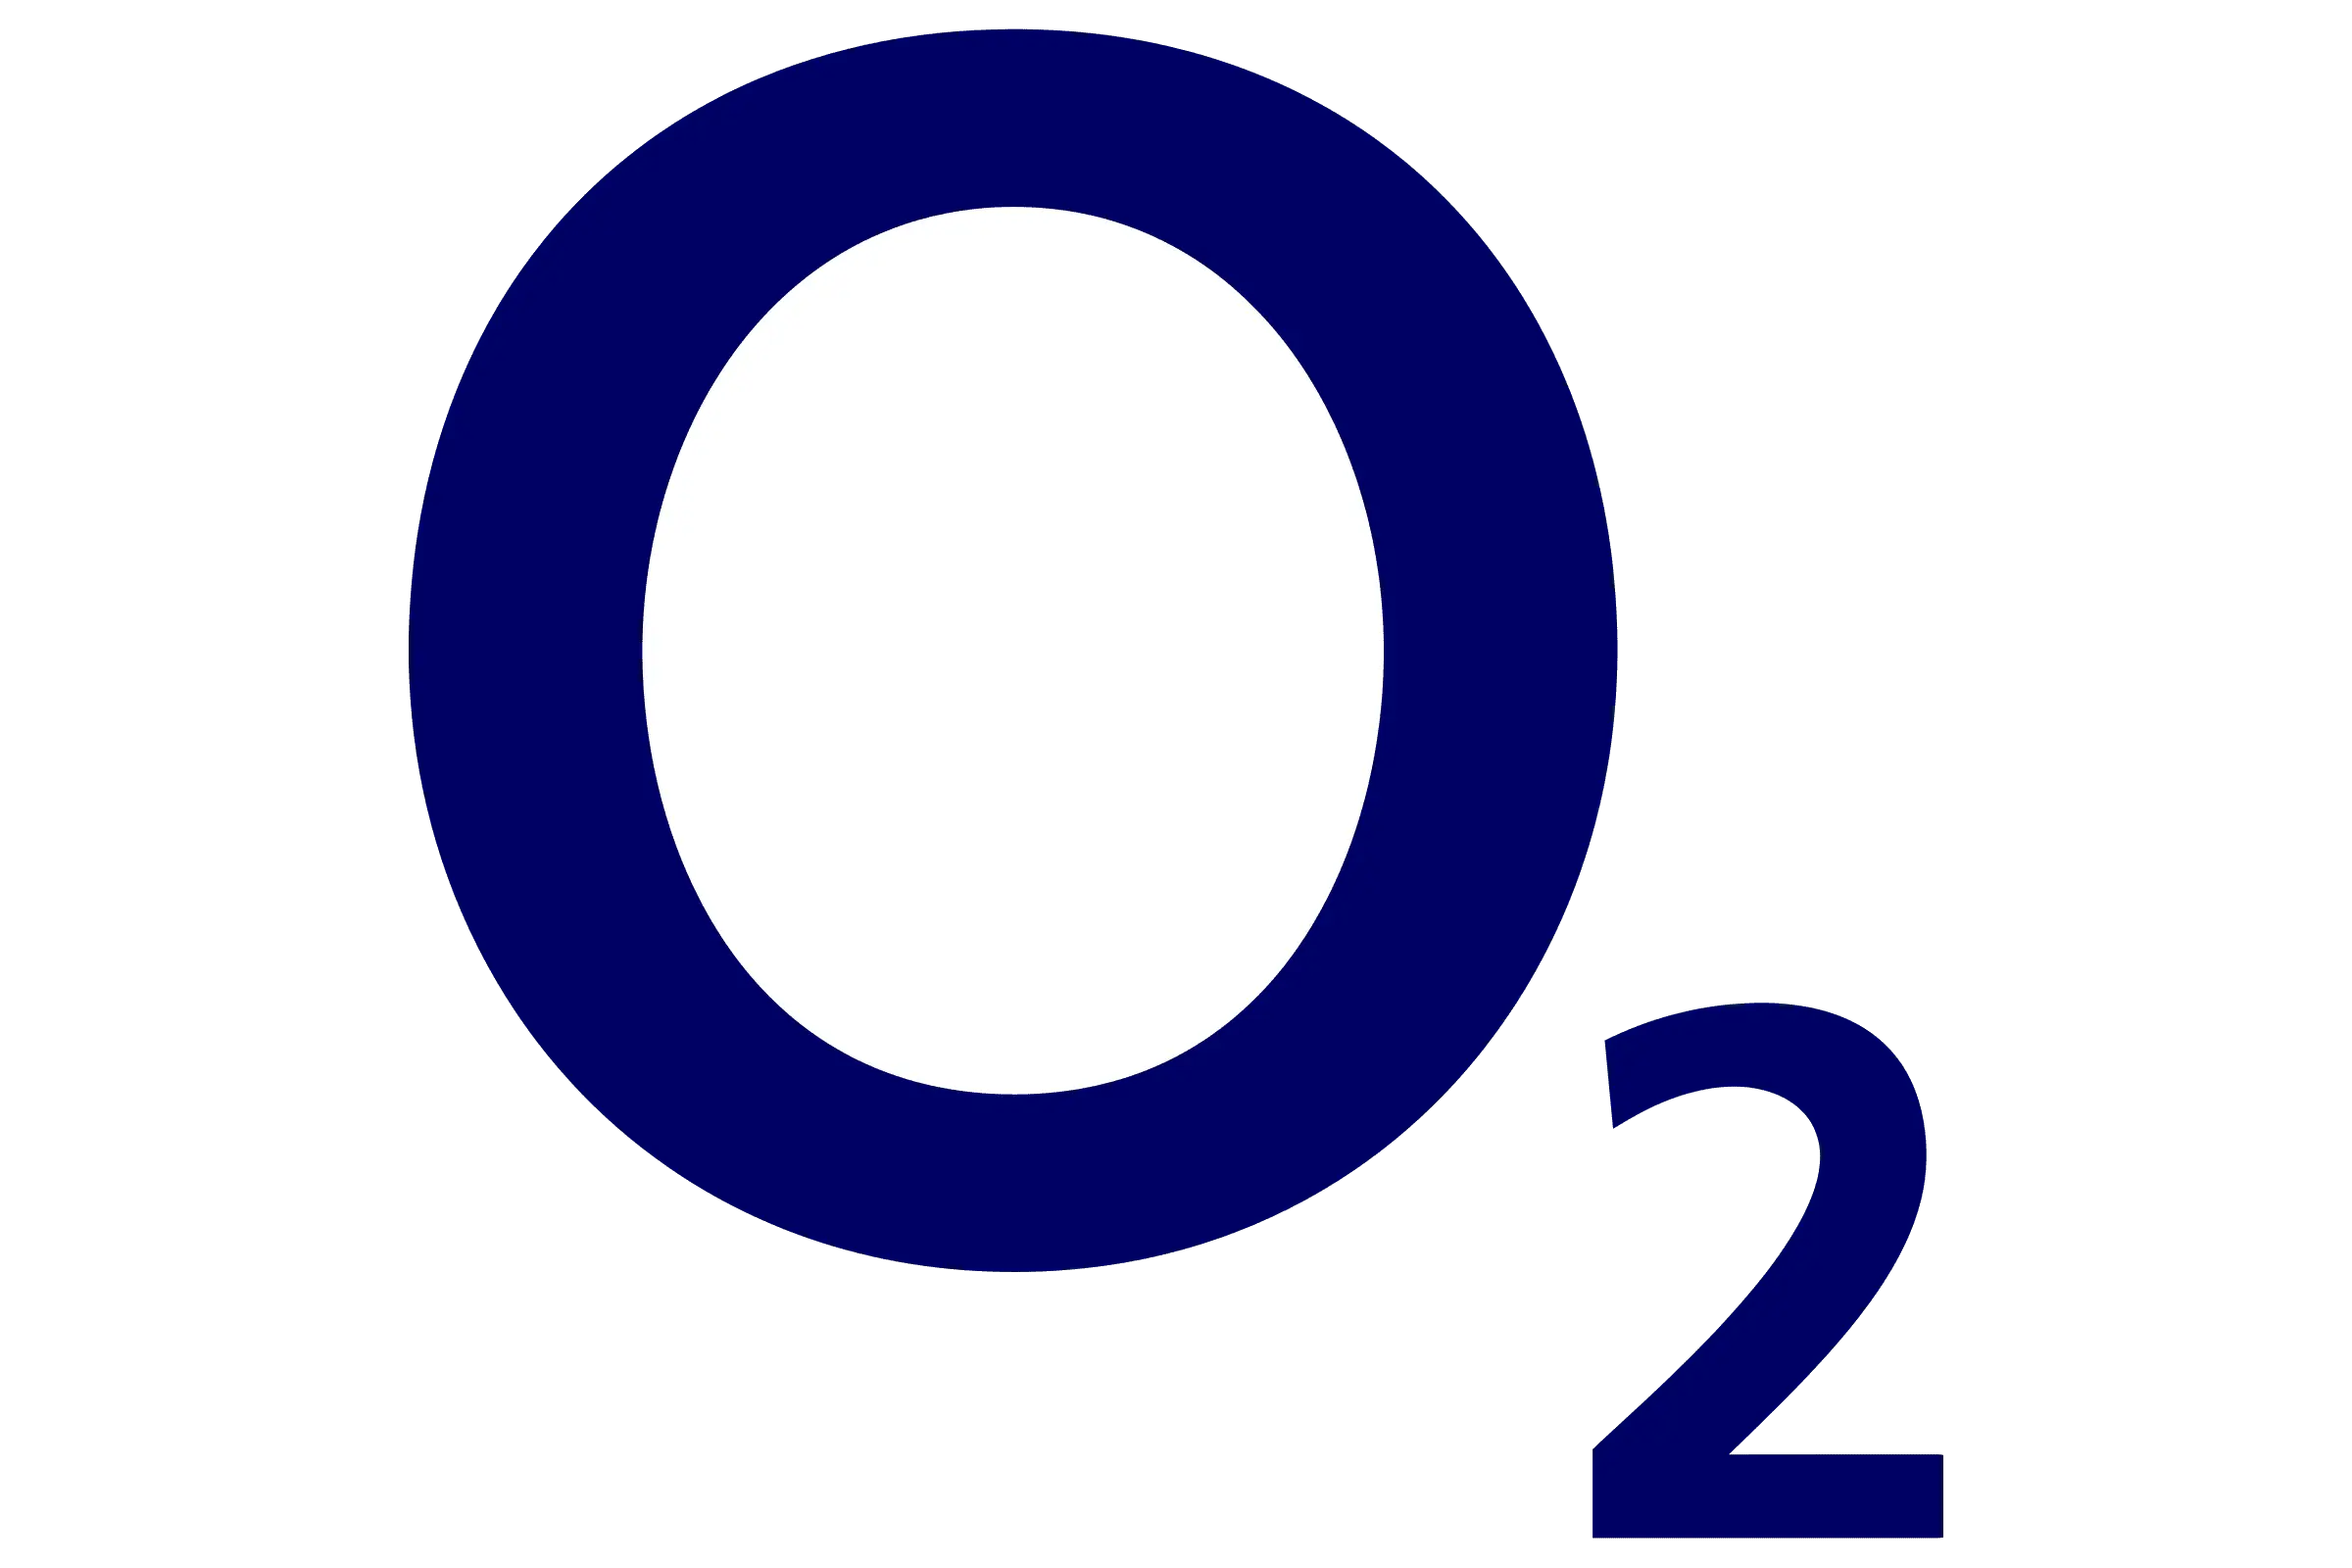 O2 network logo cutout